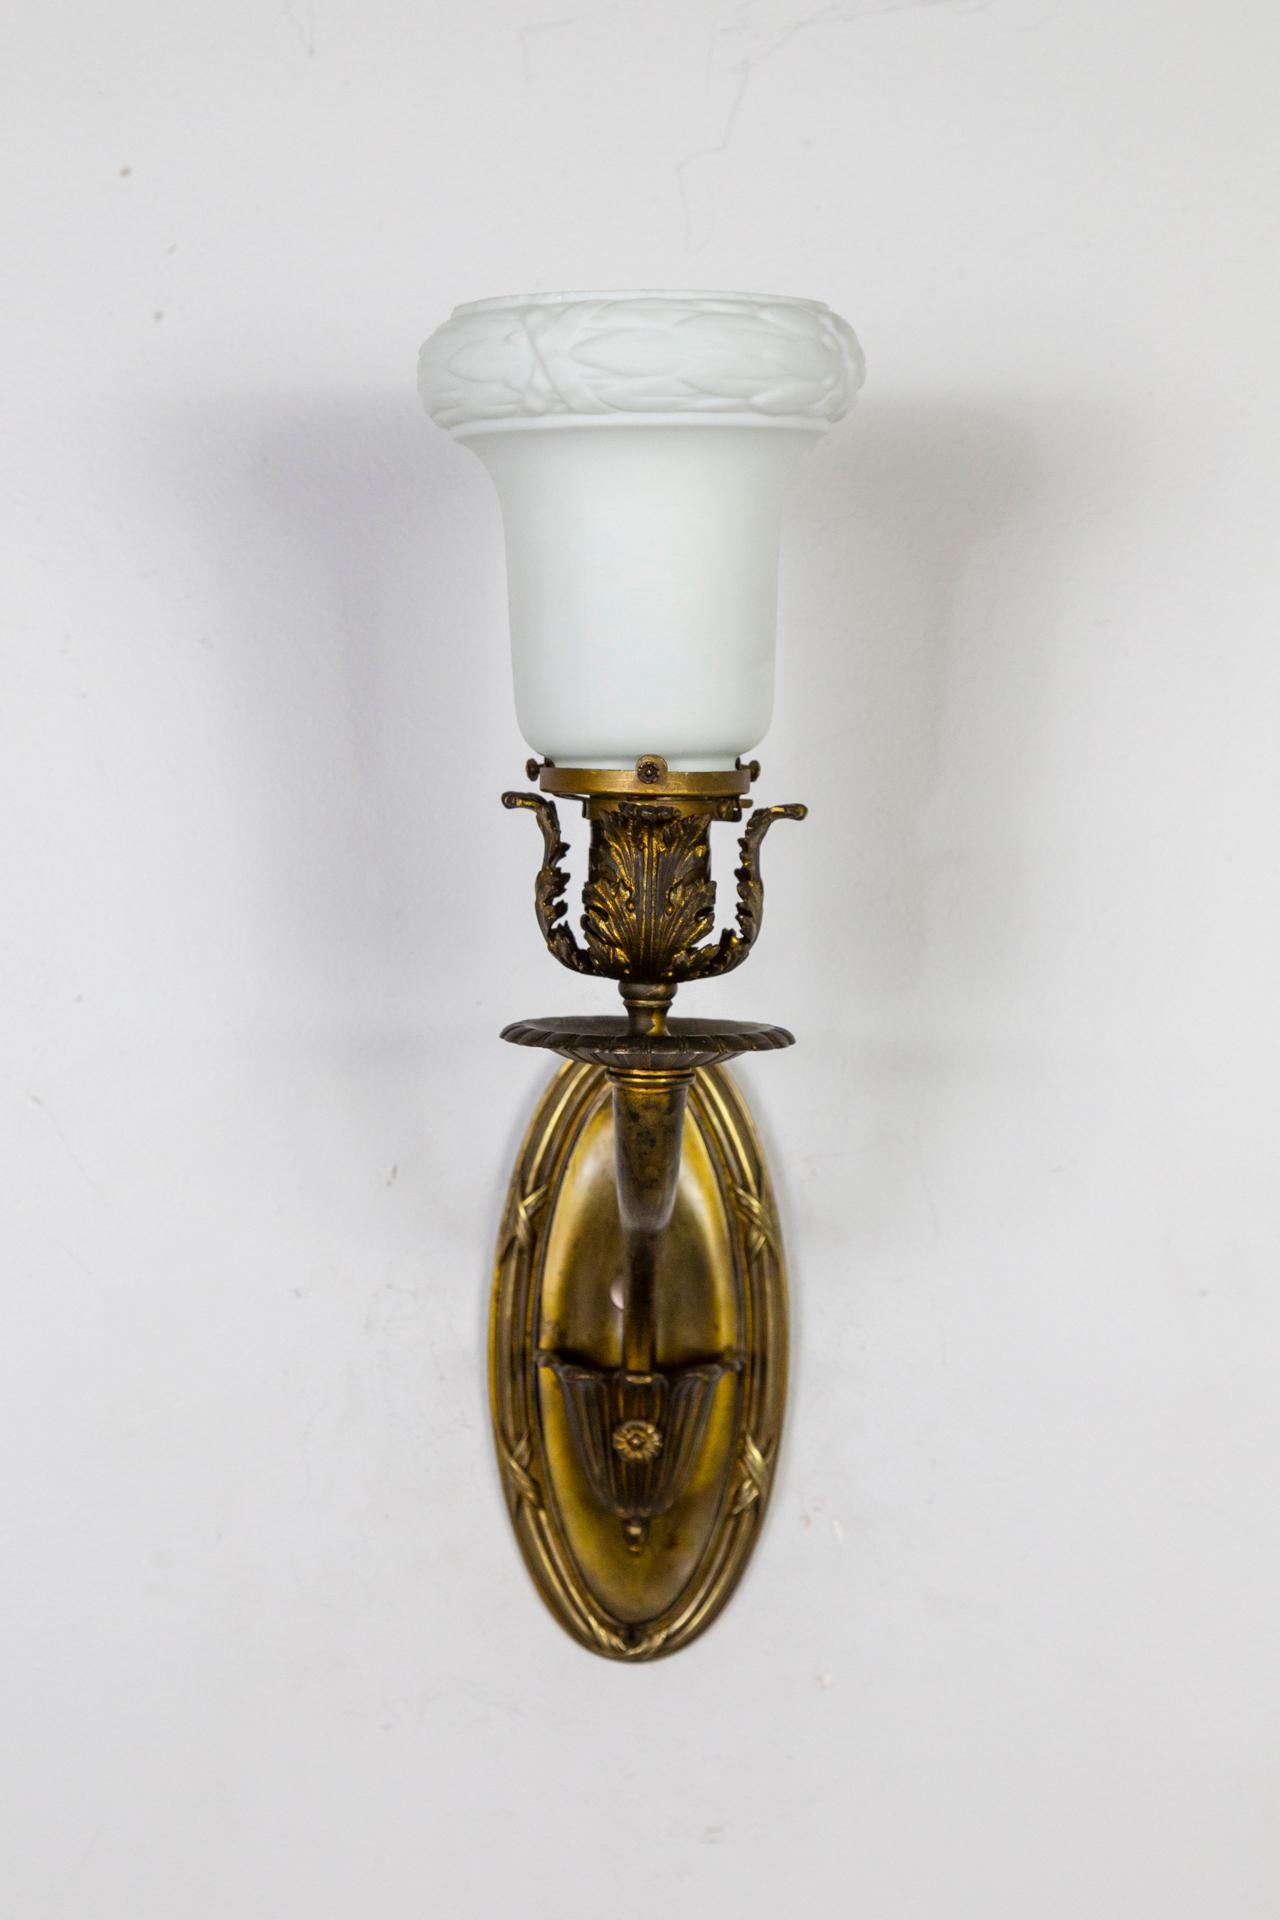 Belle Époque 19th Cent, Armed Sconces w/ Neoclassical Details & Milk Glass Shades, 'Pair' For Sale